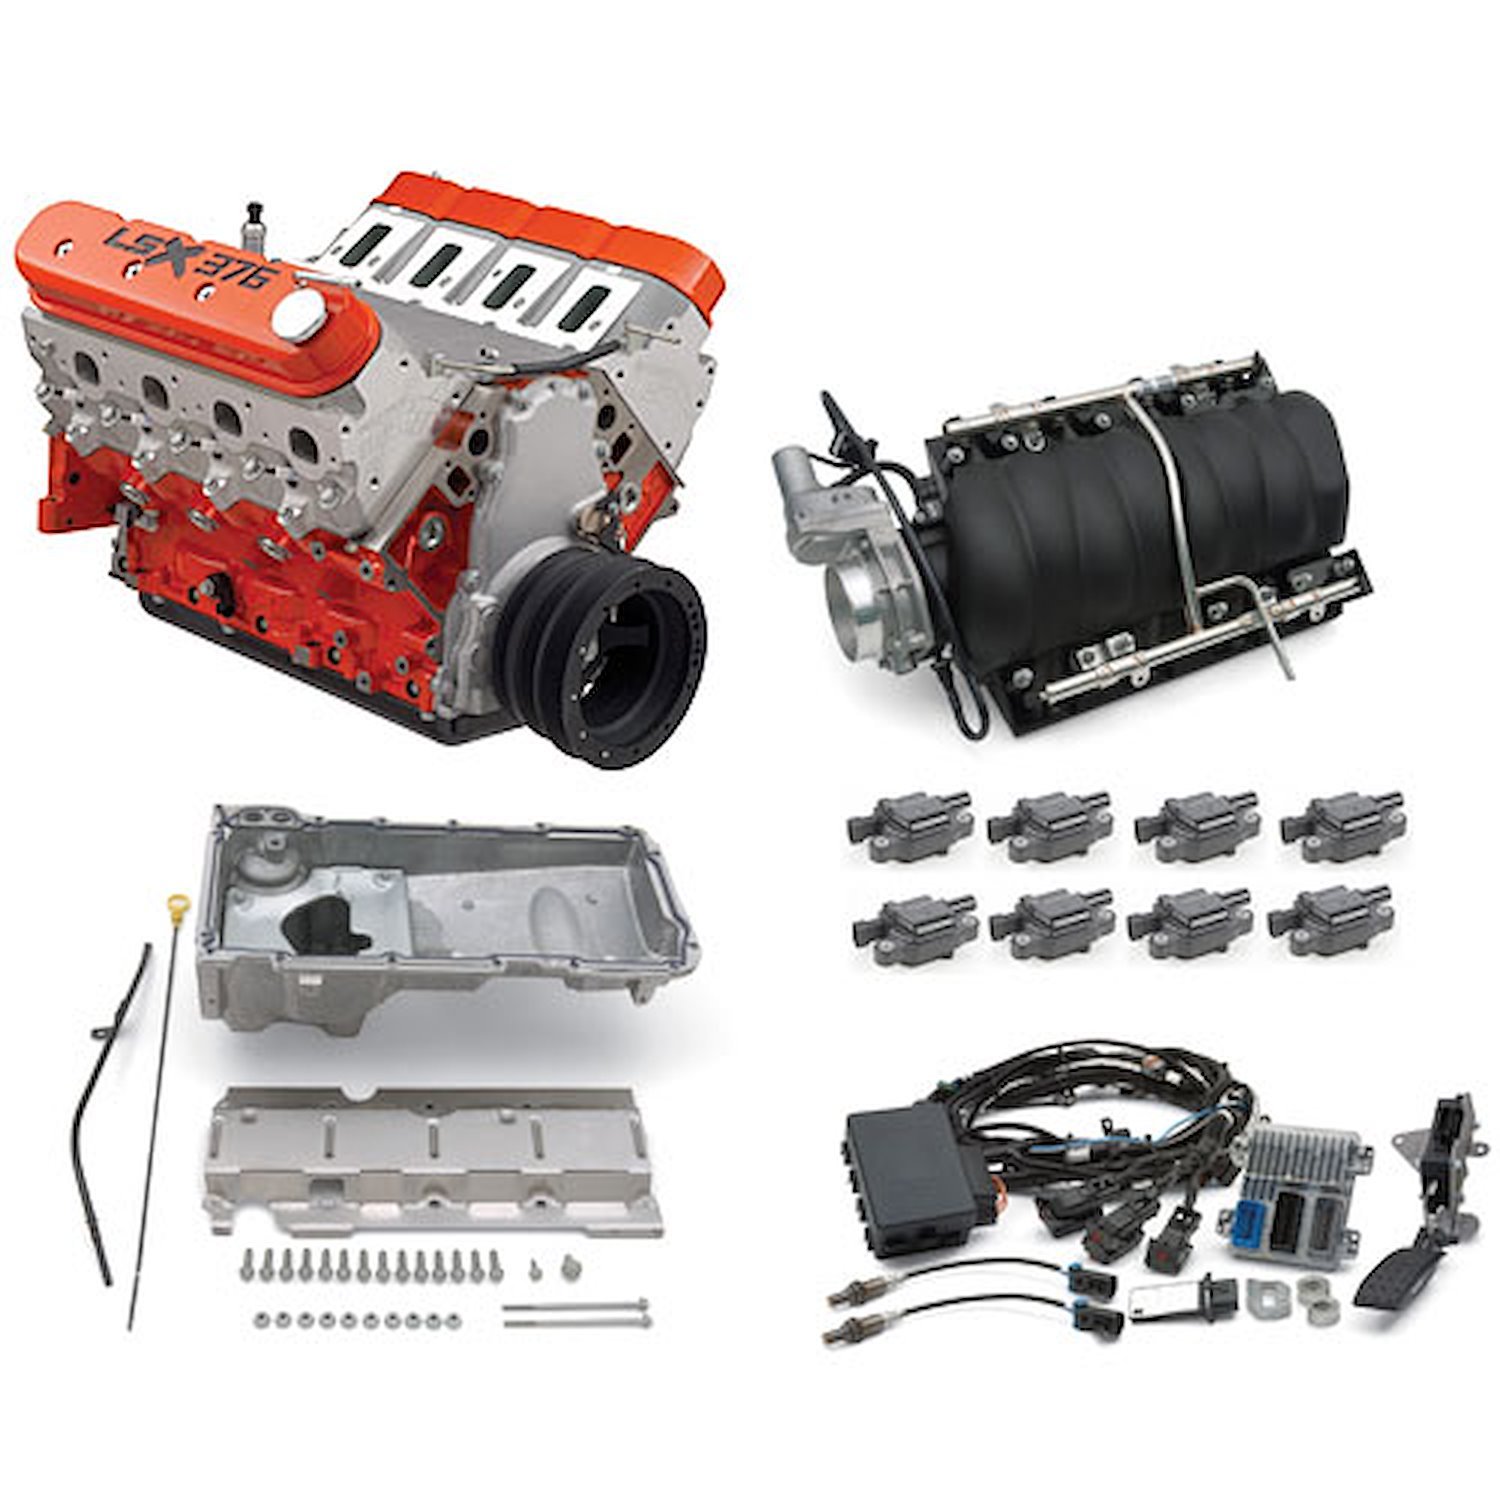 LSX376-B15 376ci Crate Engine Kit